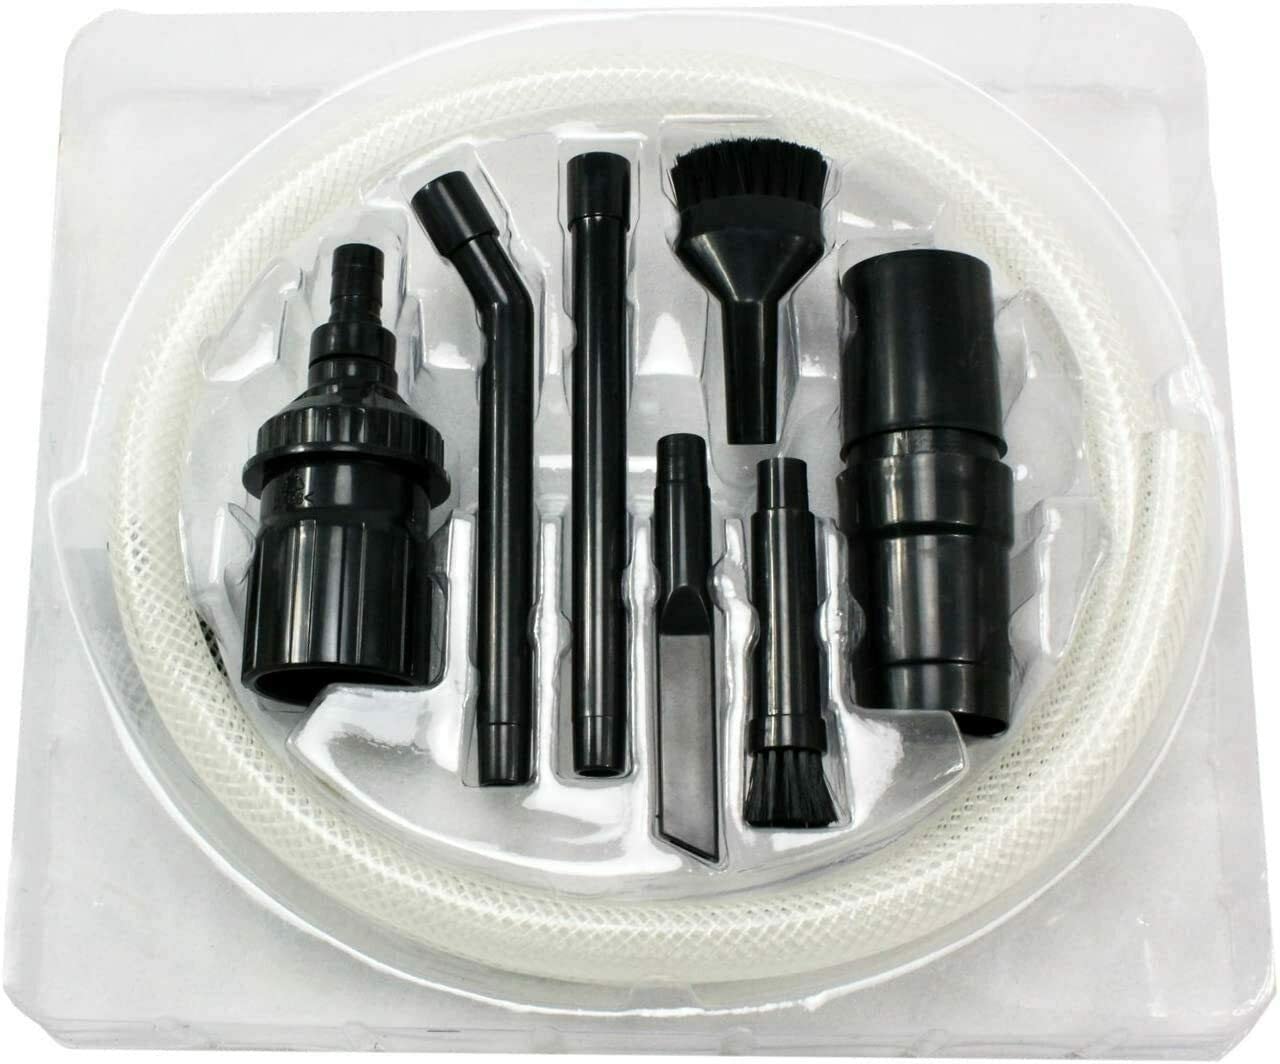 Telescopic Rod & Mini Brush Tool Kit for LG Vacuum Cleaners (32mm Diameter)